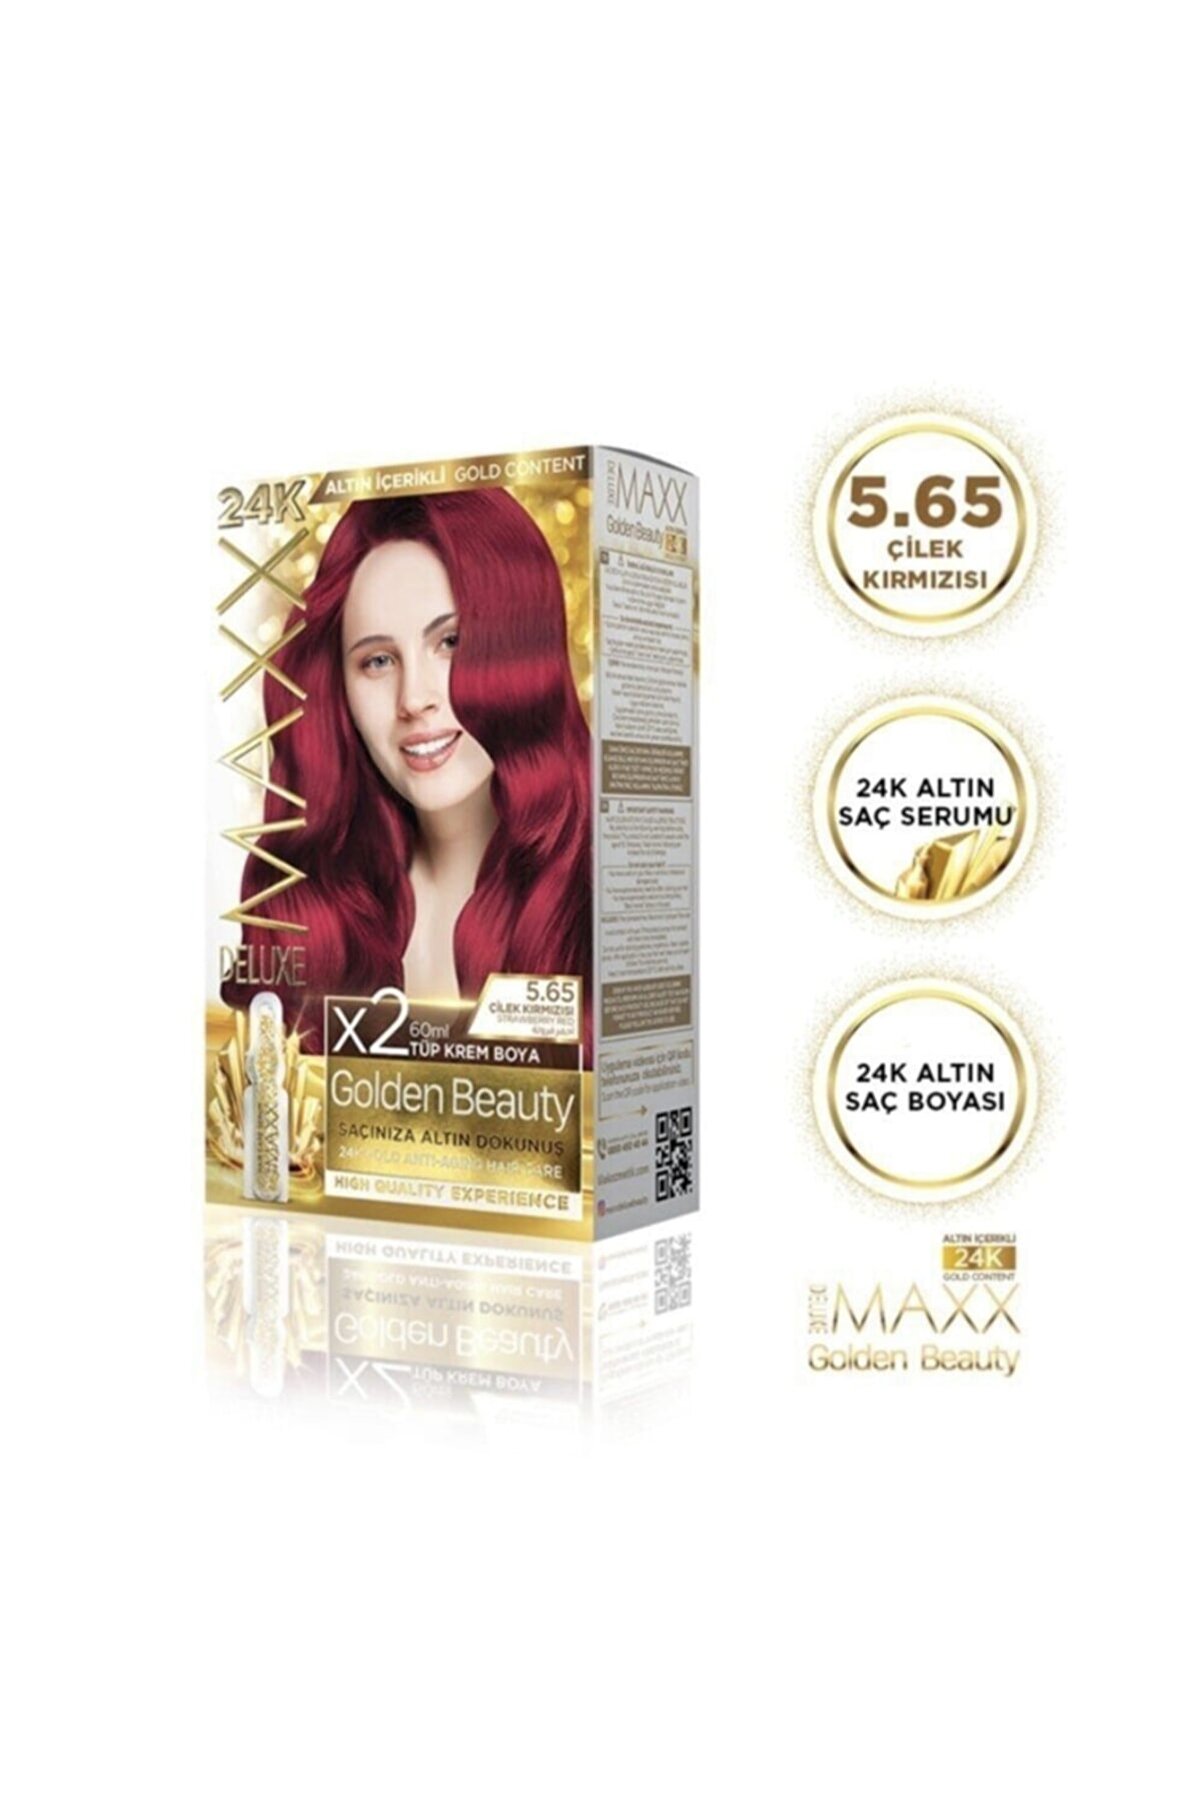 MAXX DELUXE Golden Beauty 5.65 Çilek Kırmızısı Set Boya